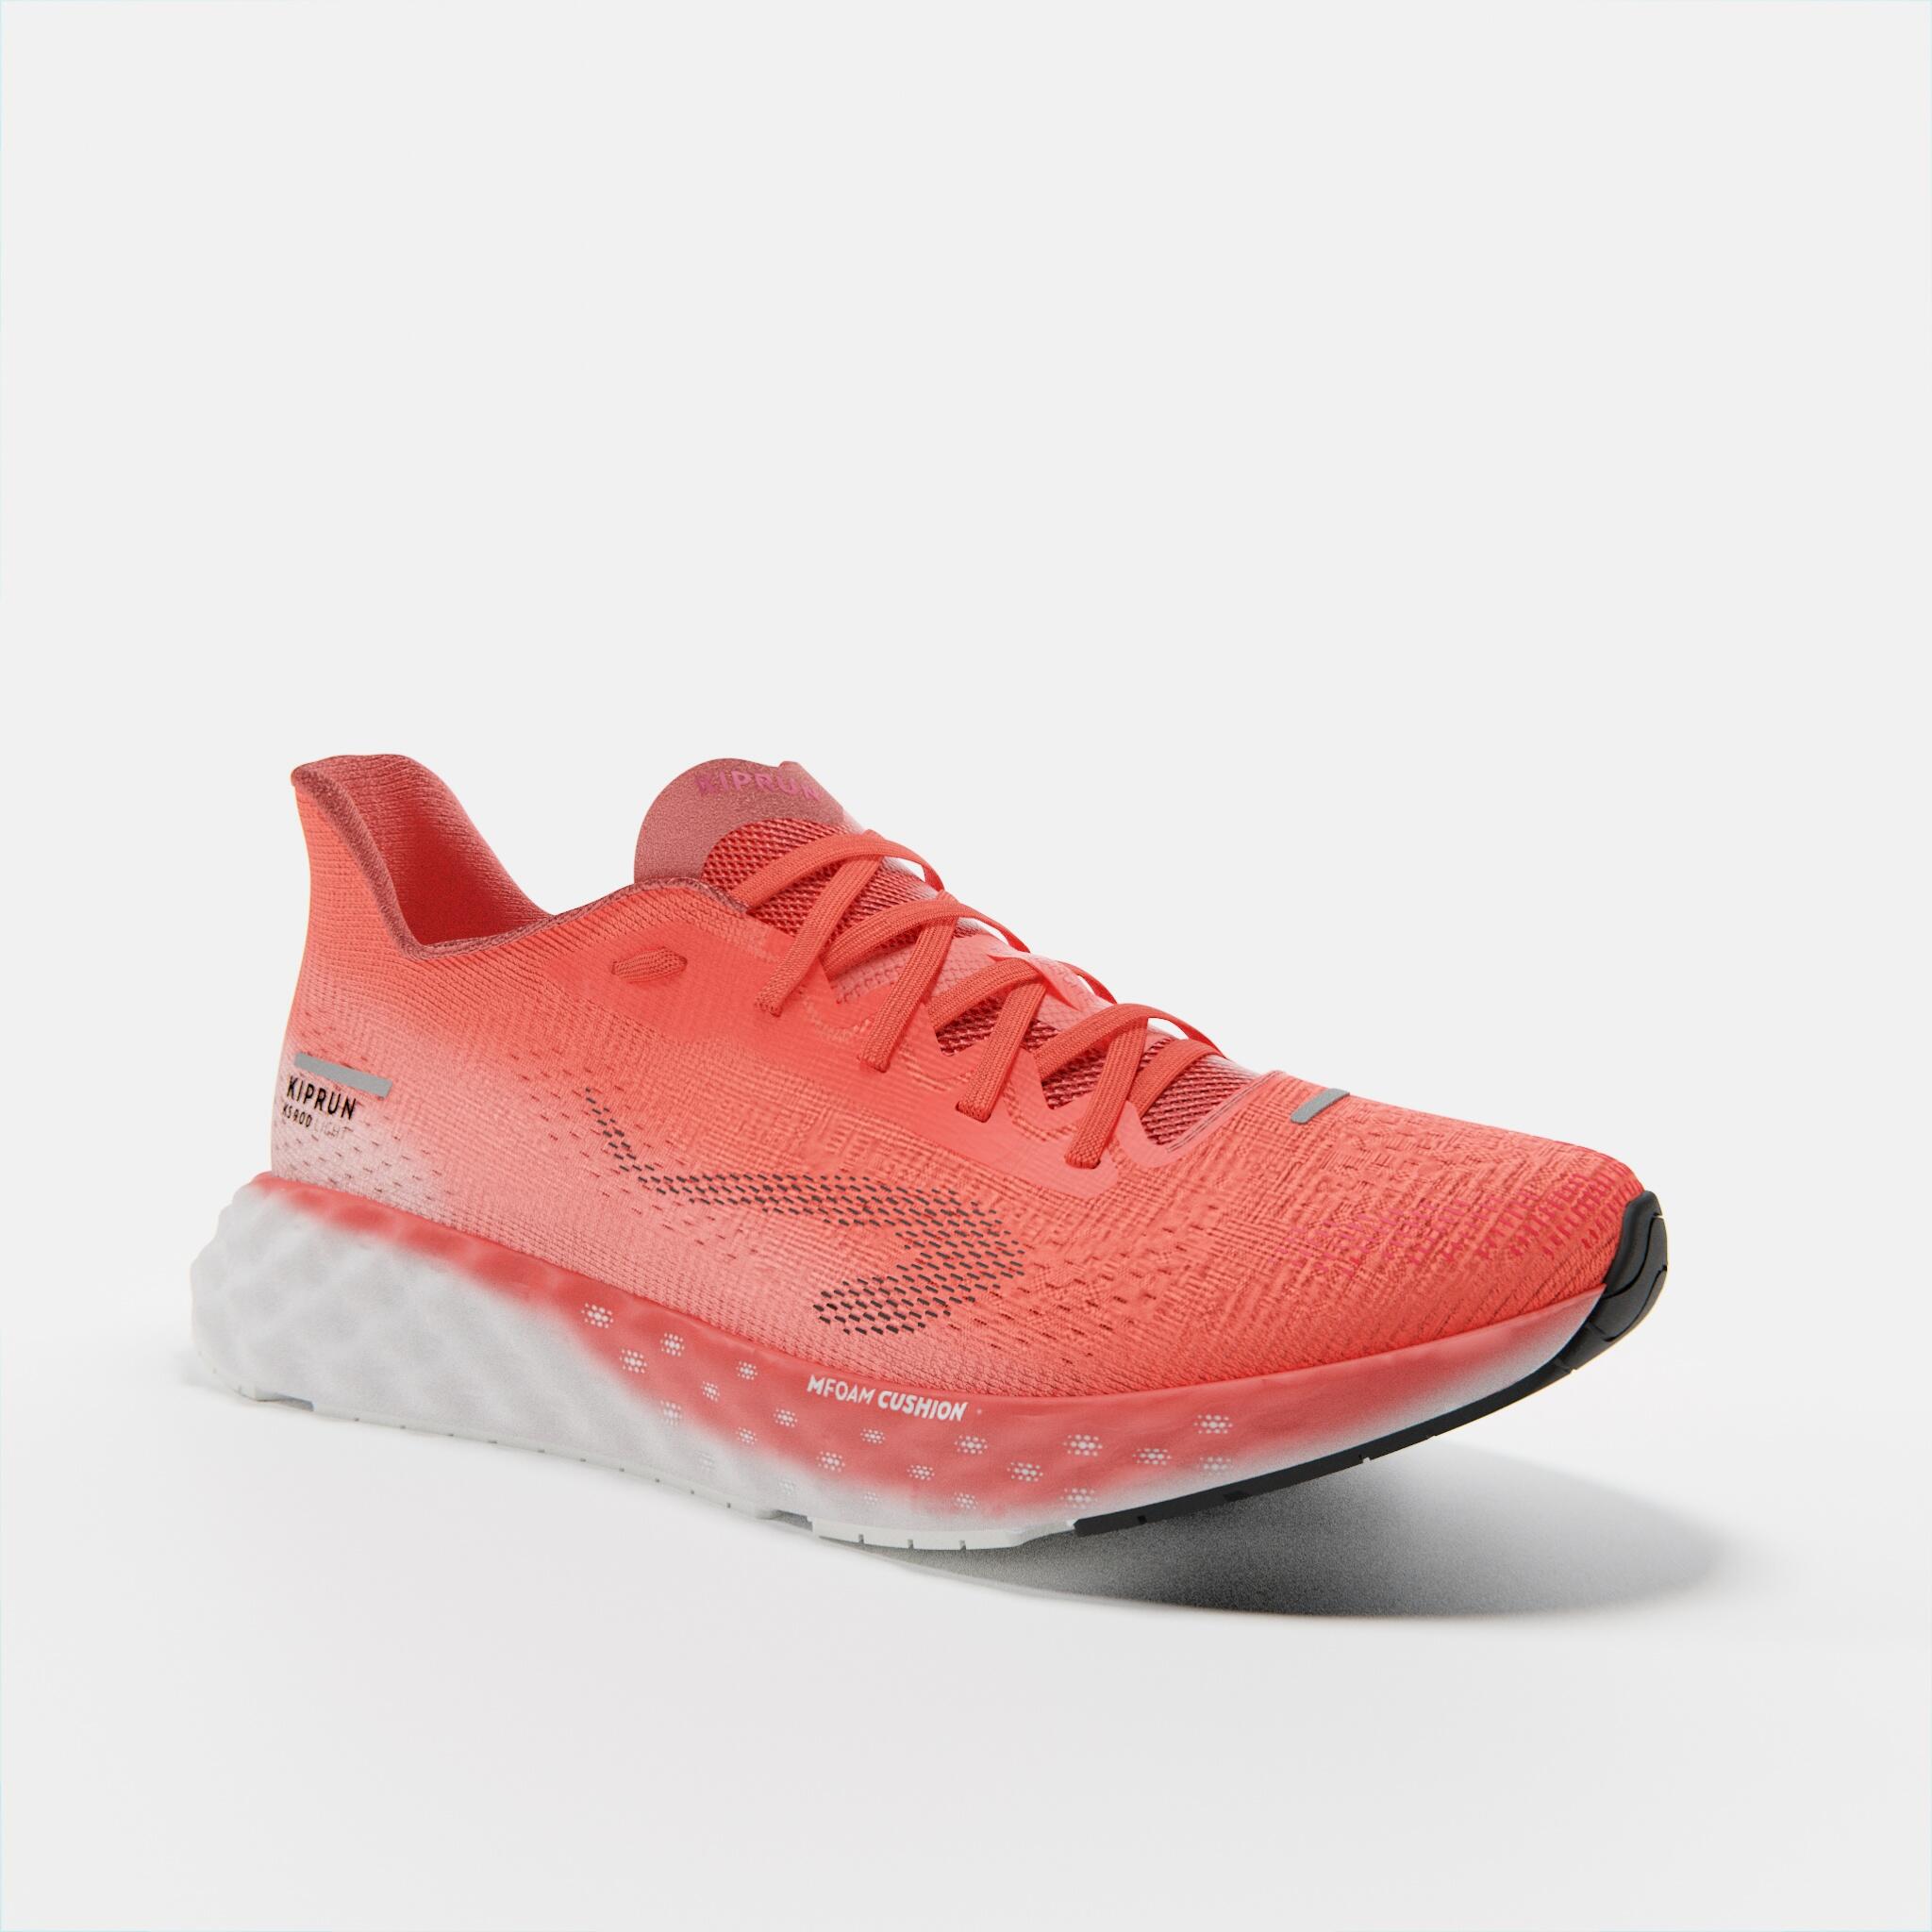  KIPRUN KS900 Women's Running Shoes - Light coral 11/12